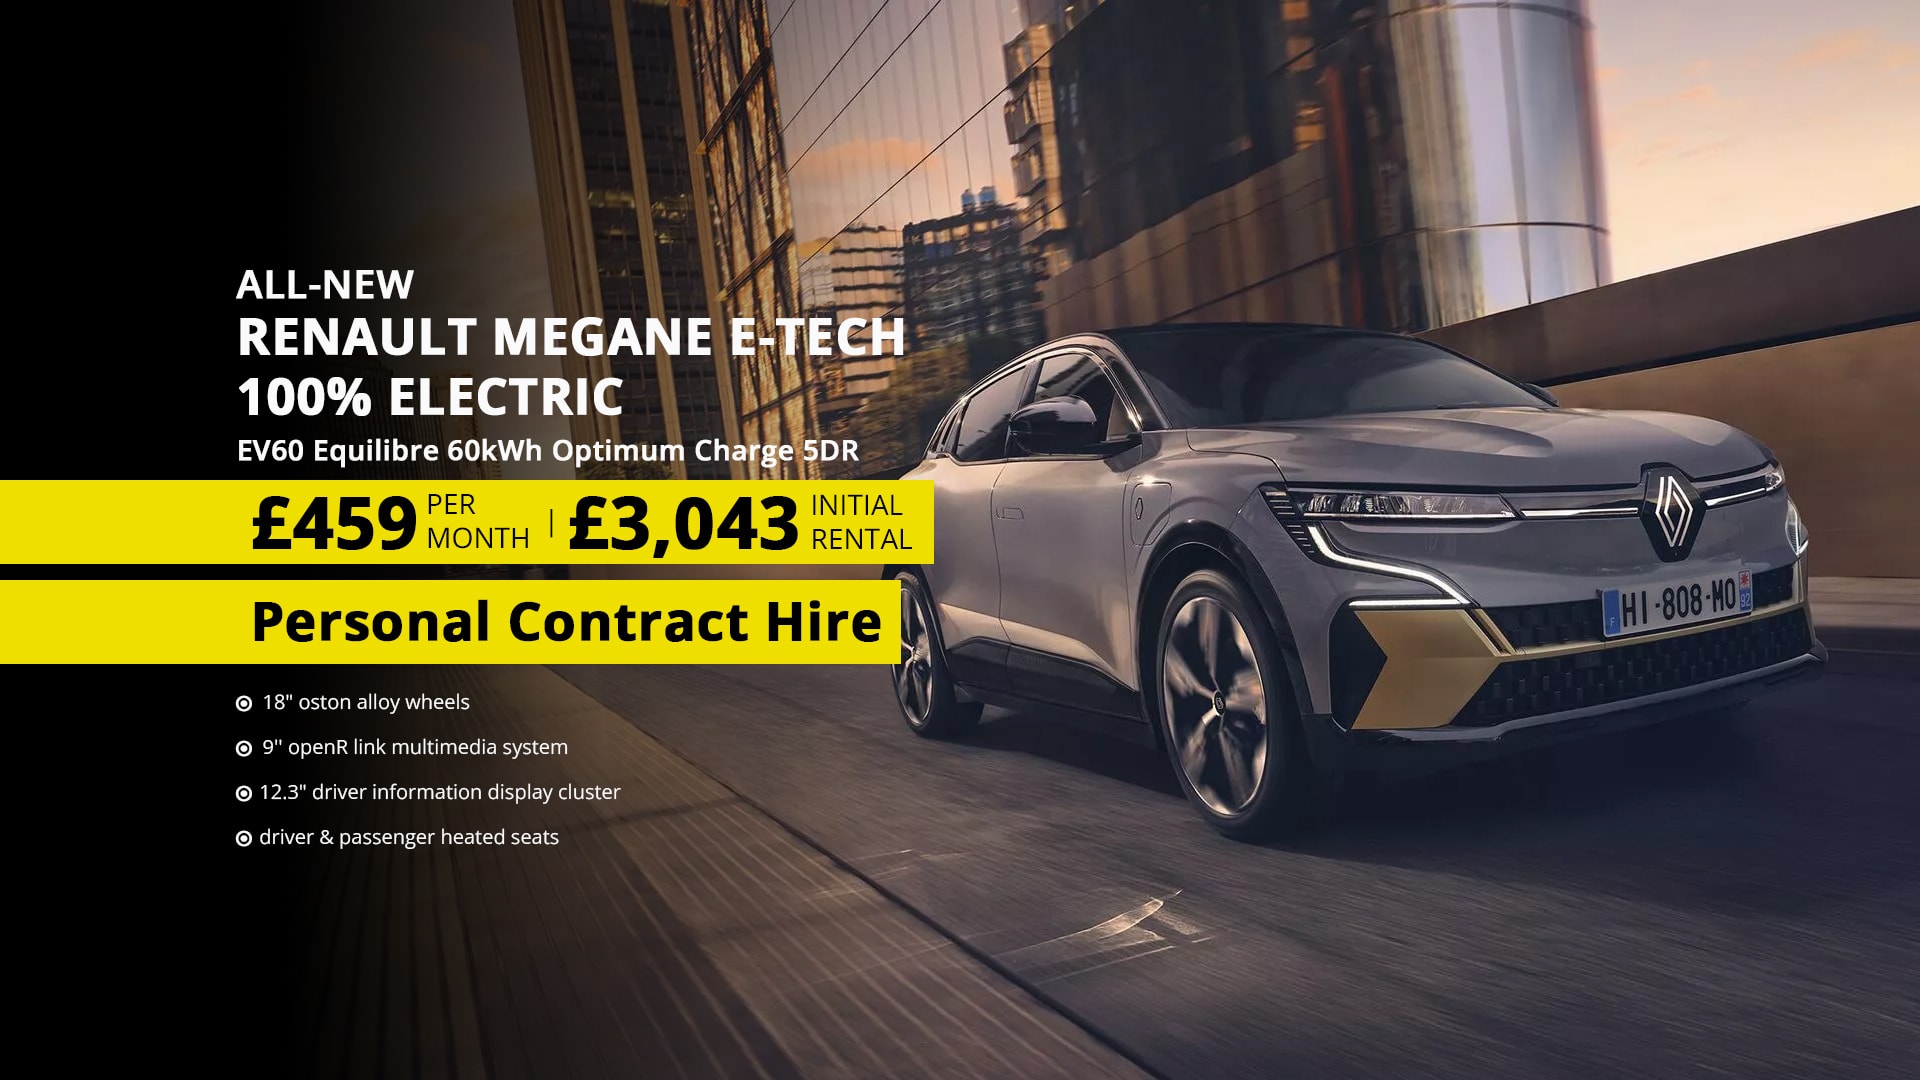 All New Renault Megane E-Tech